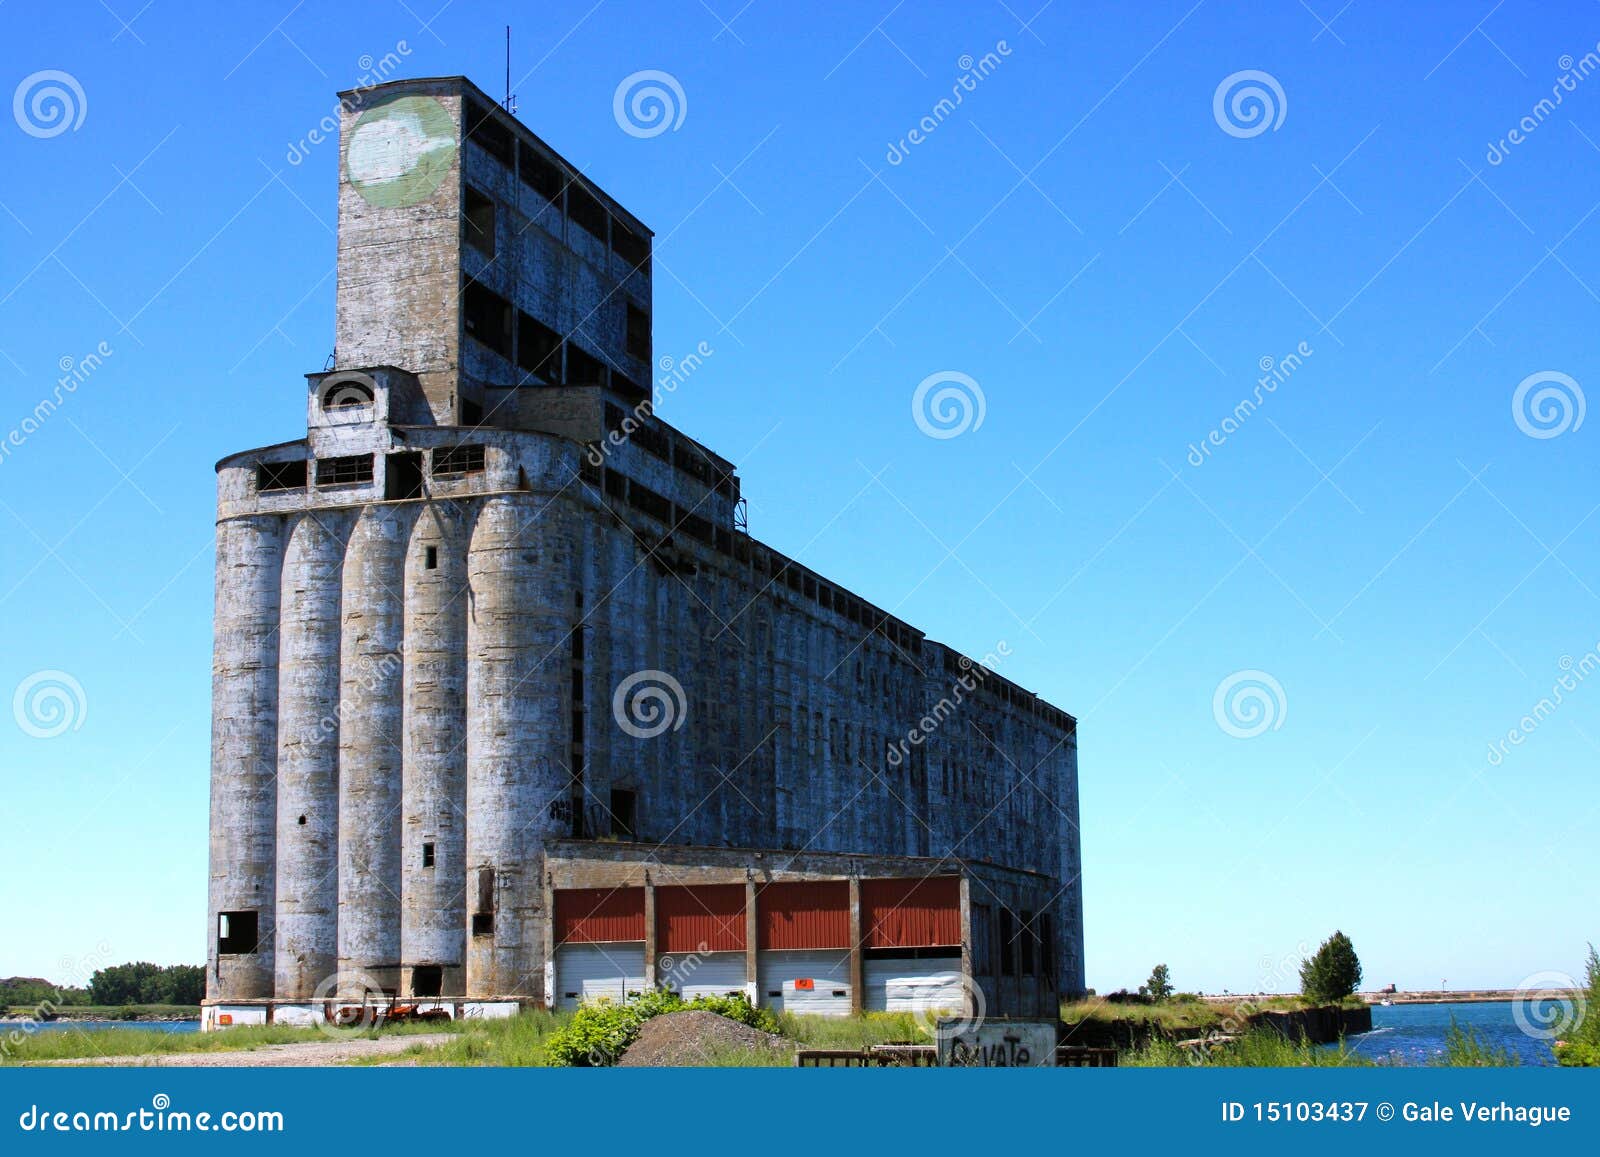 vintage grain elevator and silos in buffalo new york